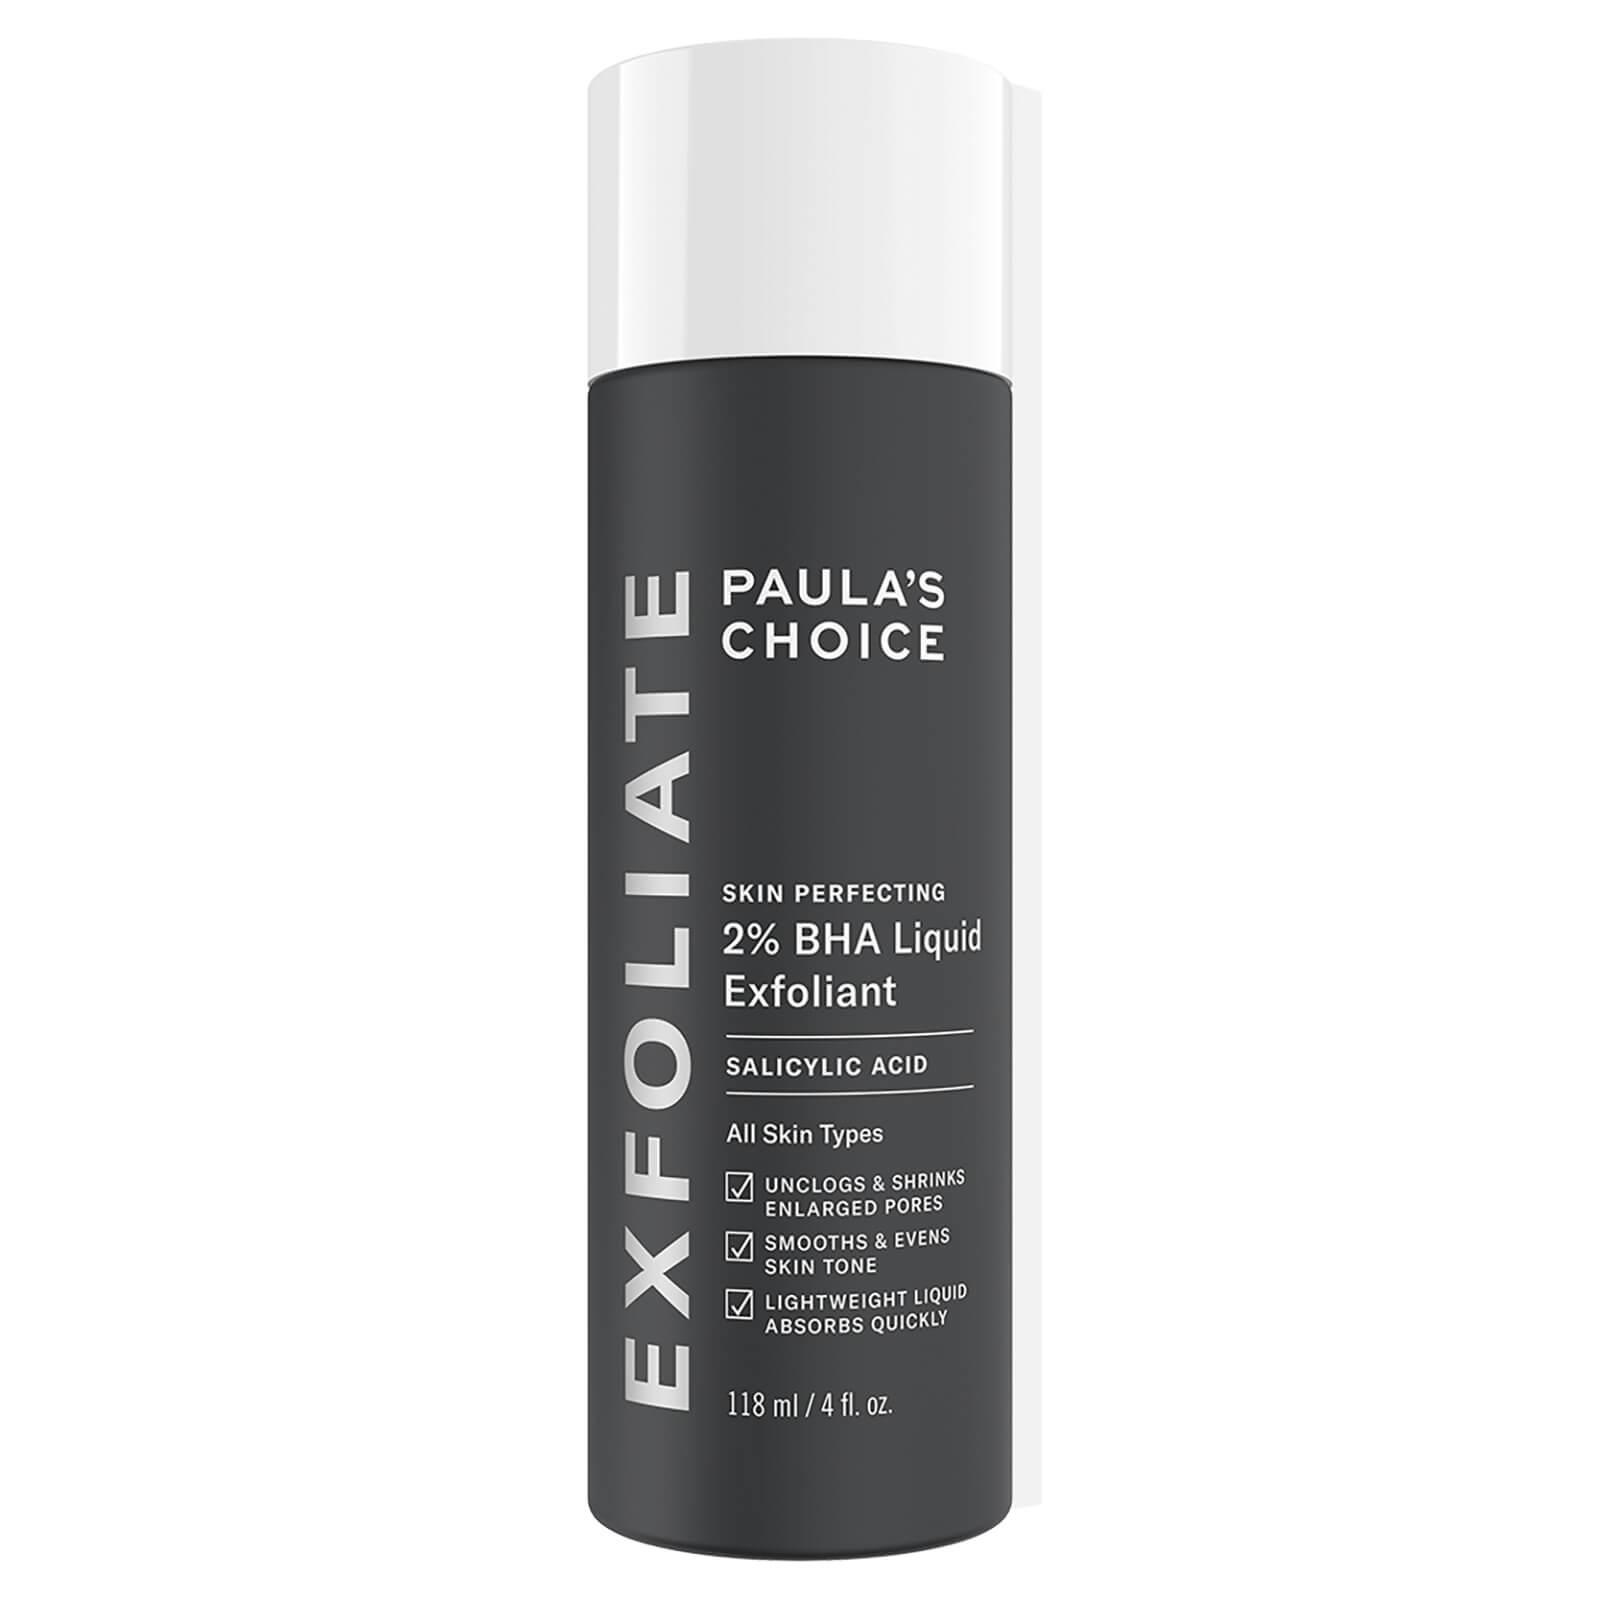 Paulas Choice Skin Perfecting 2% BHA Liquid Exfoliant 118ml